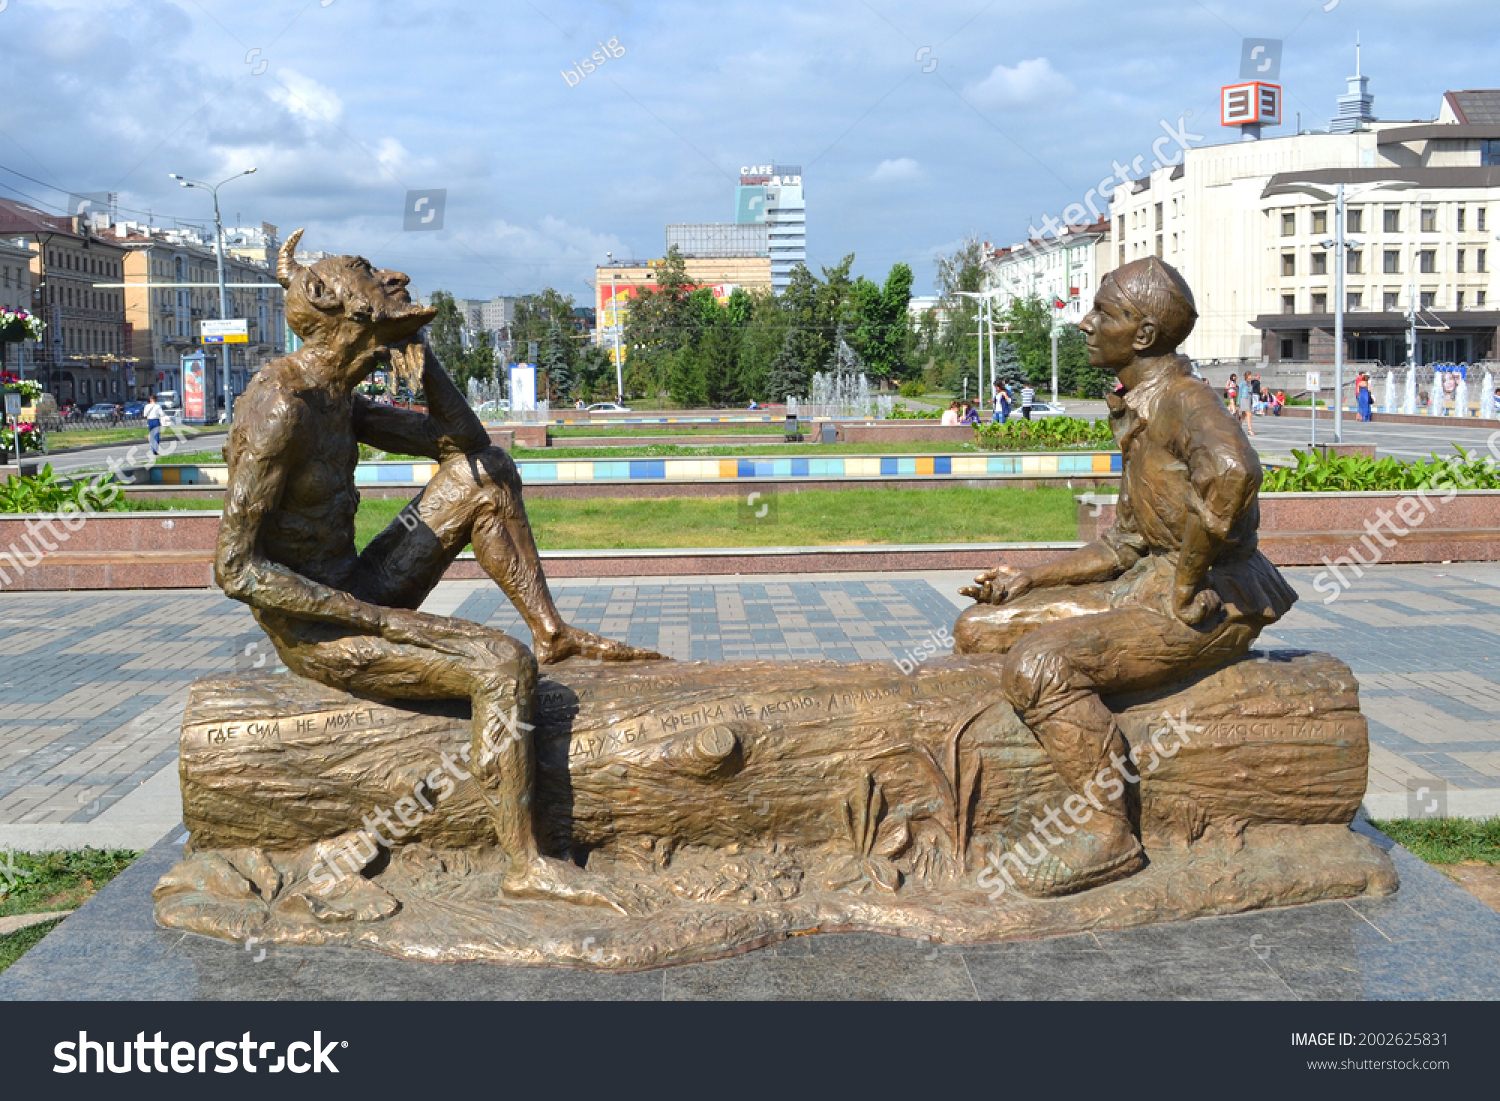 Памятник Шурале в Казани